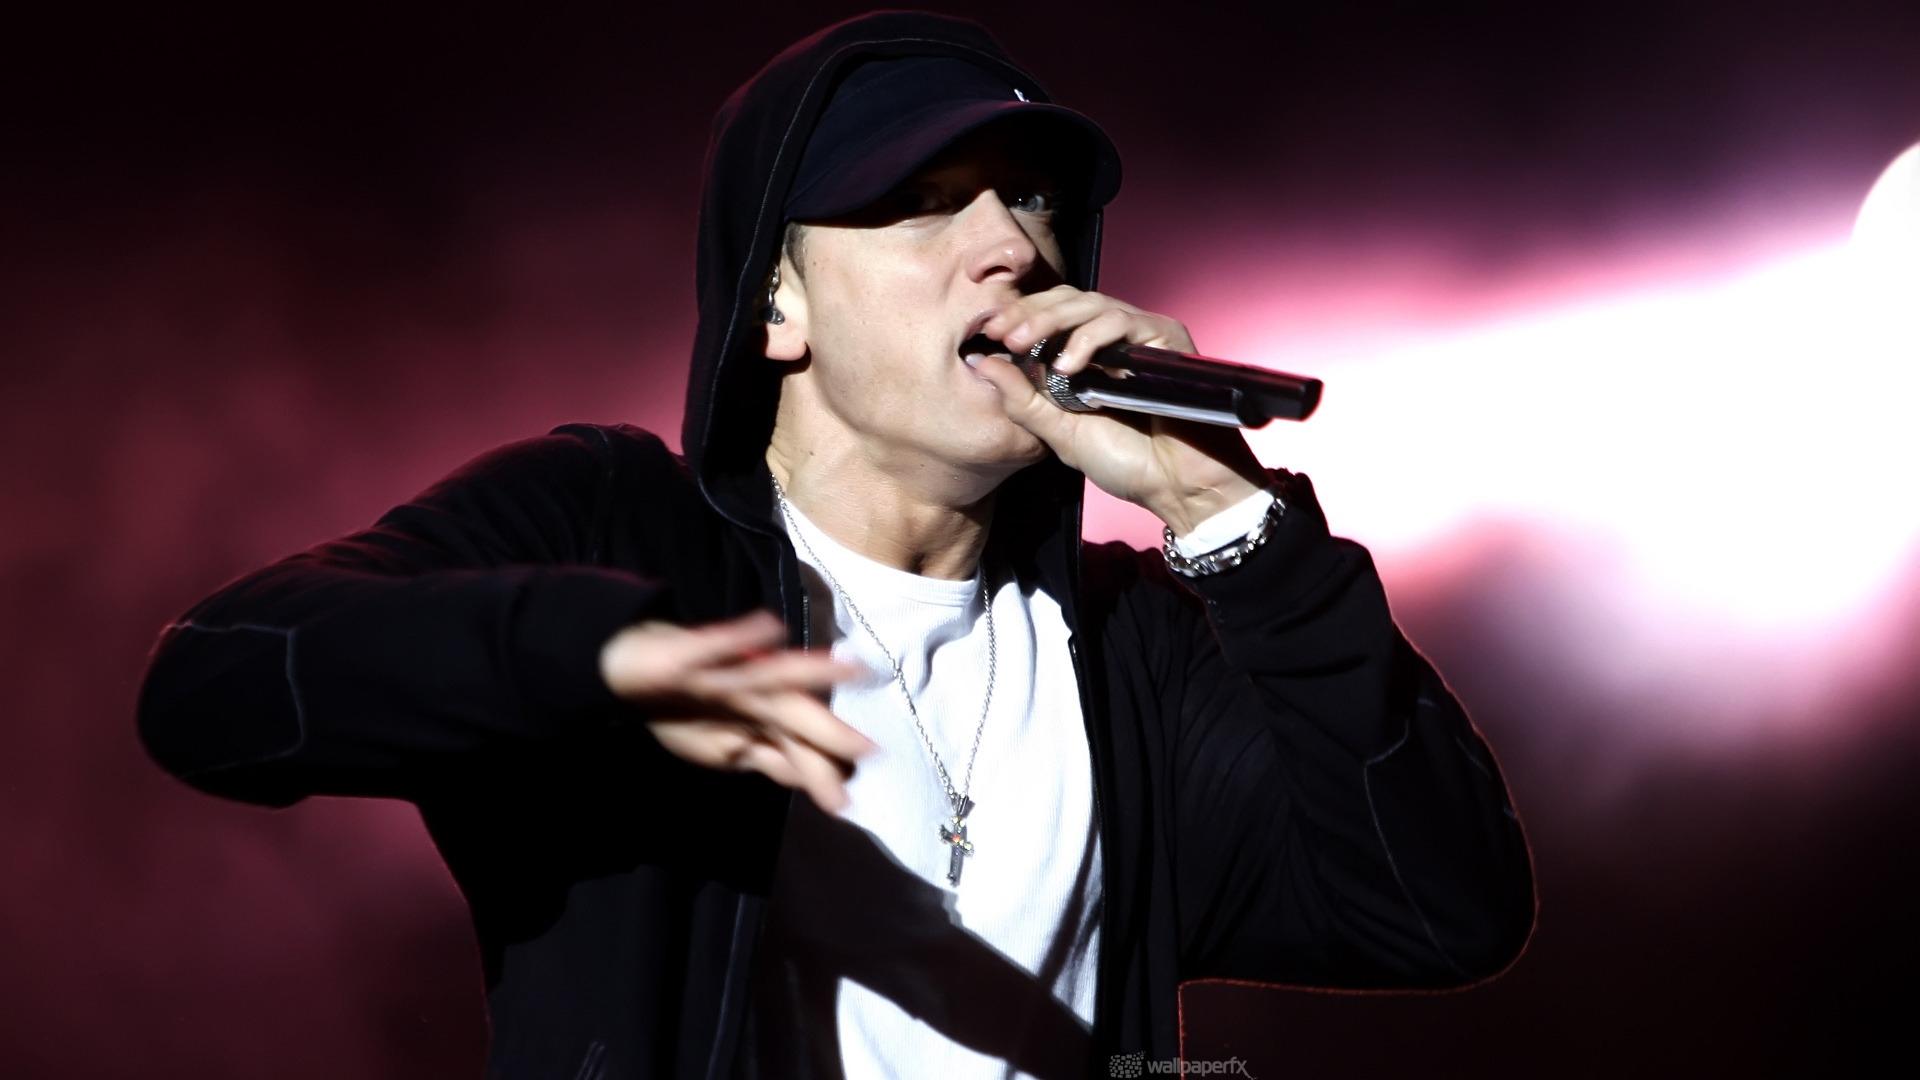 Eminem Performing for 1920 x 1080 HDTV 1080p resolution